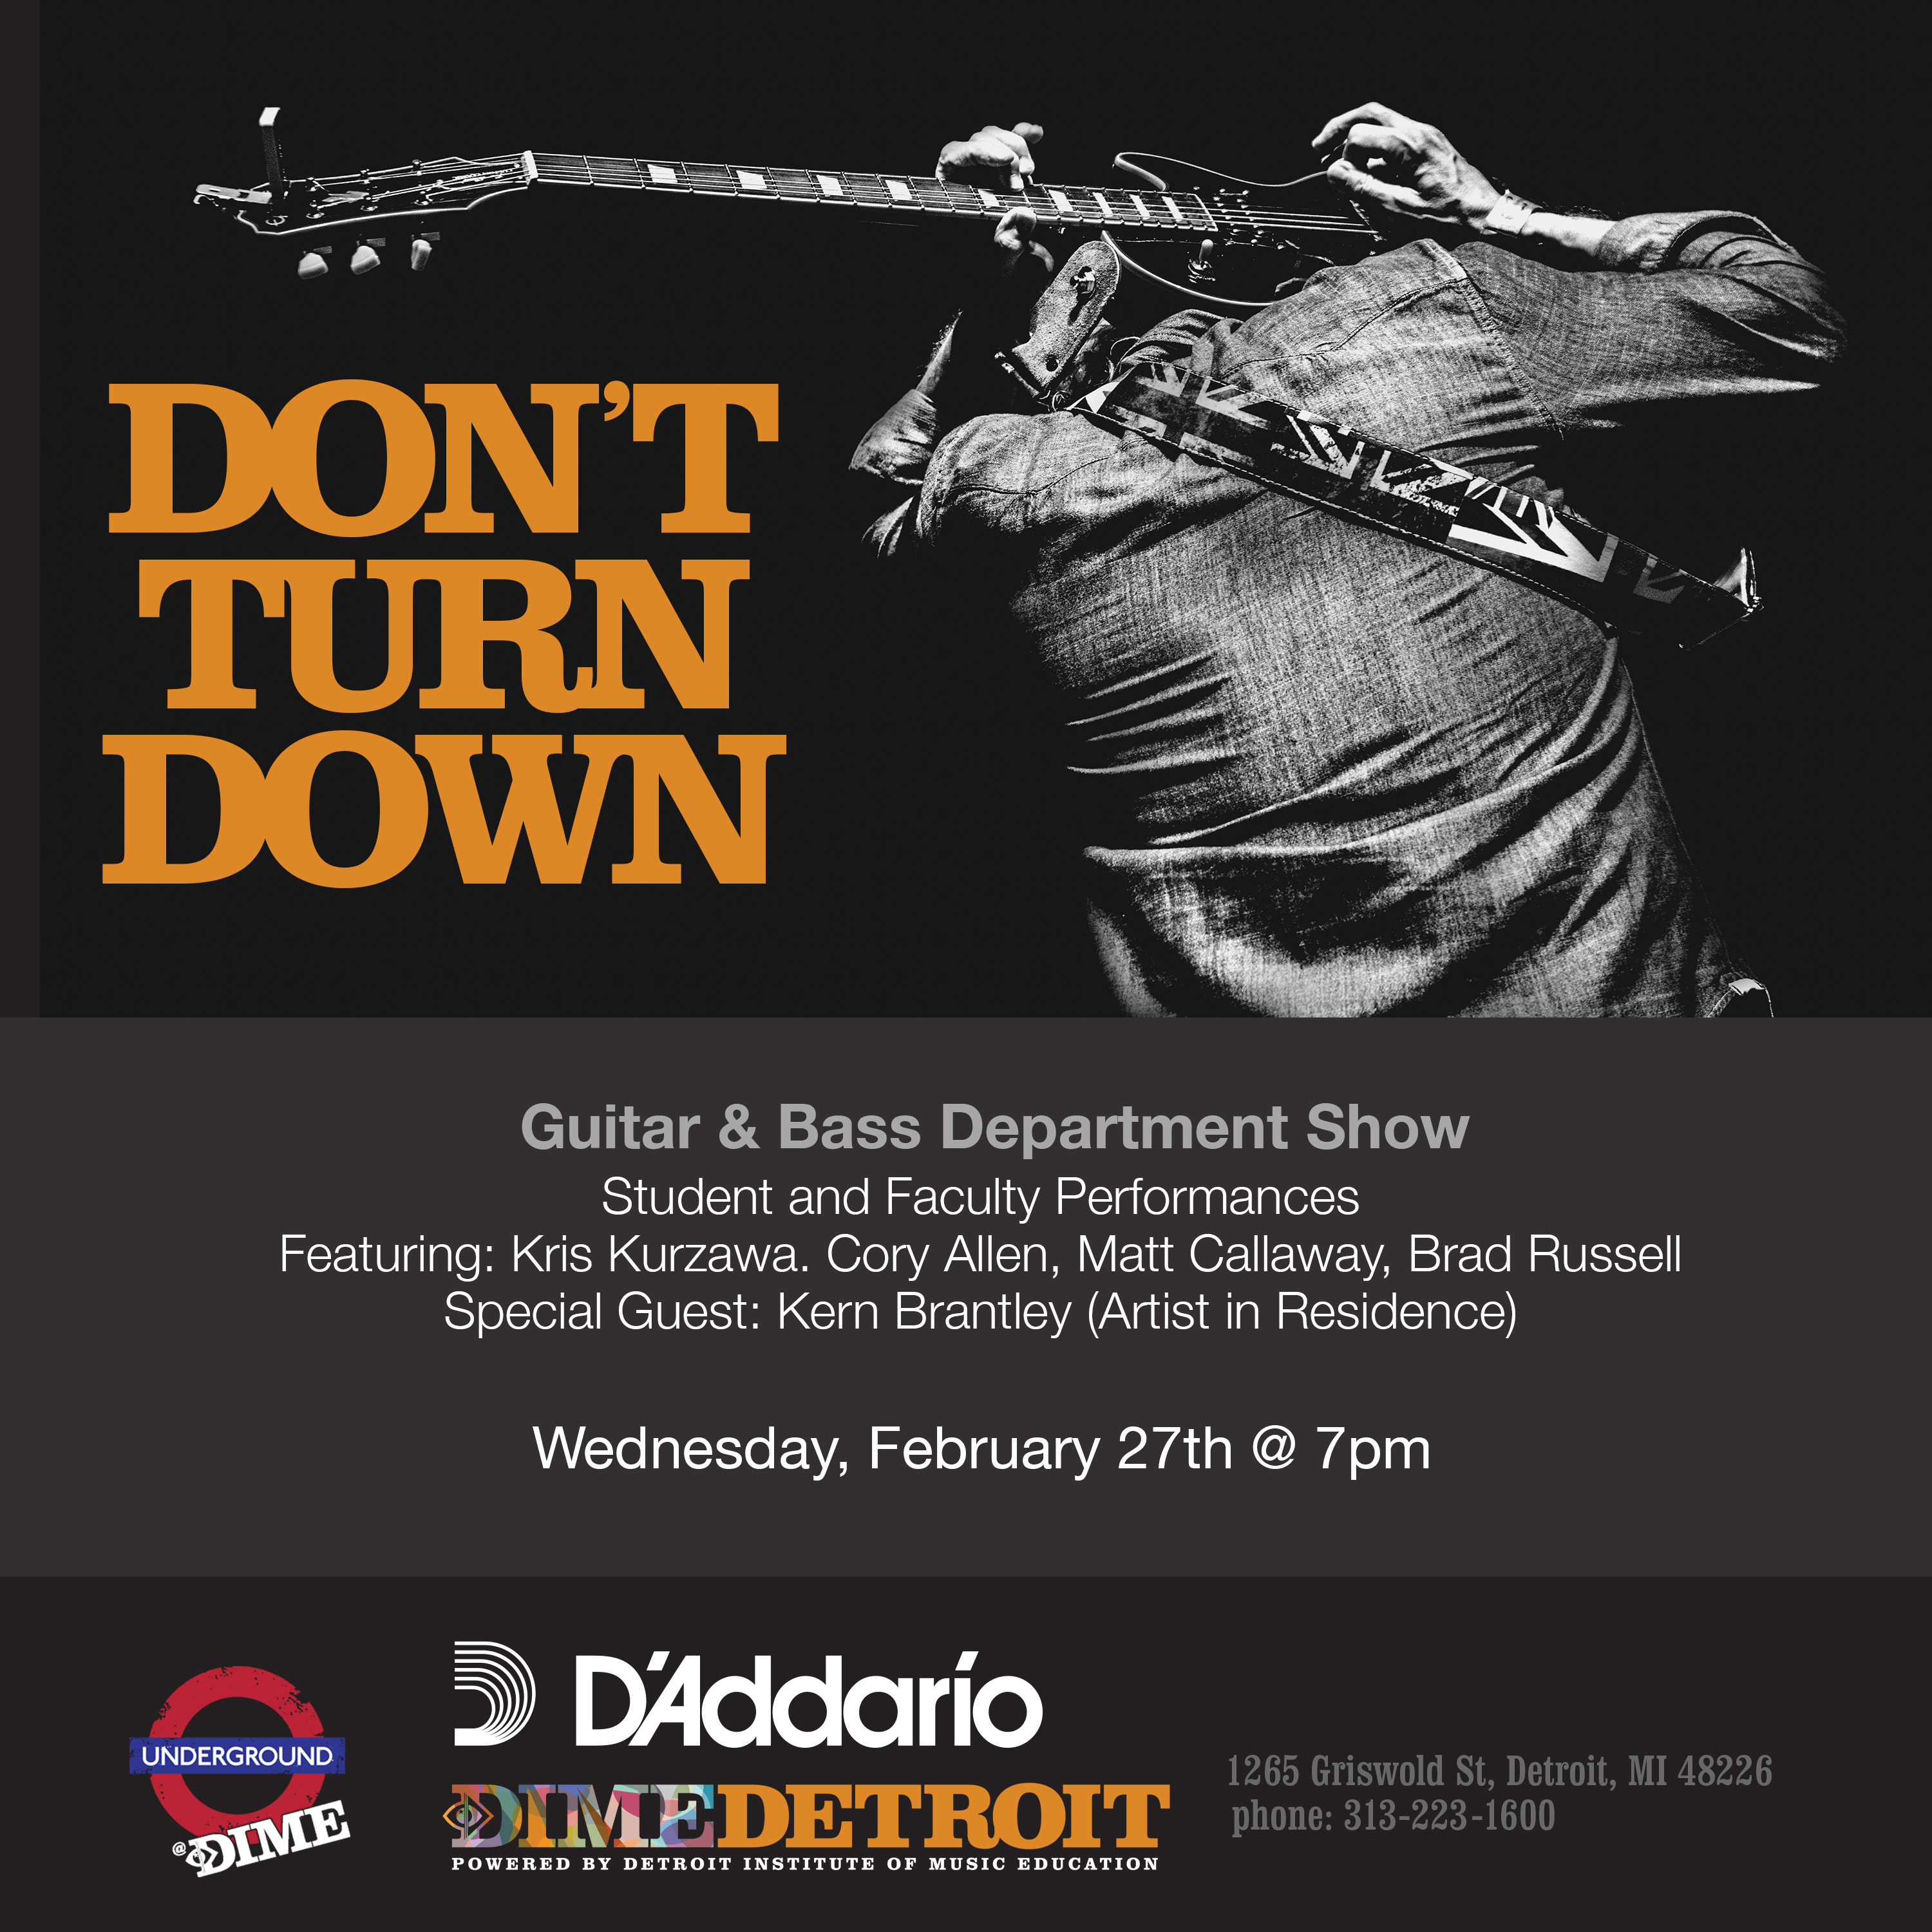 DON'T TURN DOWN: Guitar & Bass Department Show